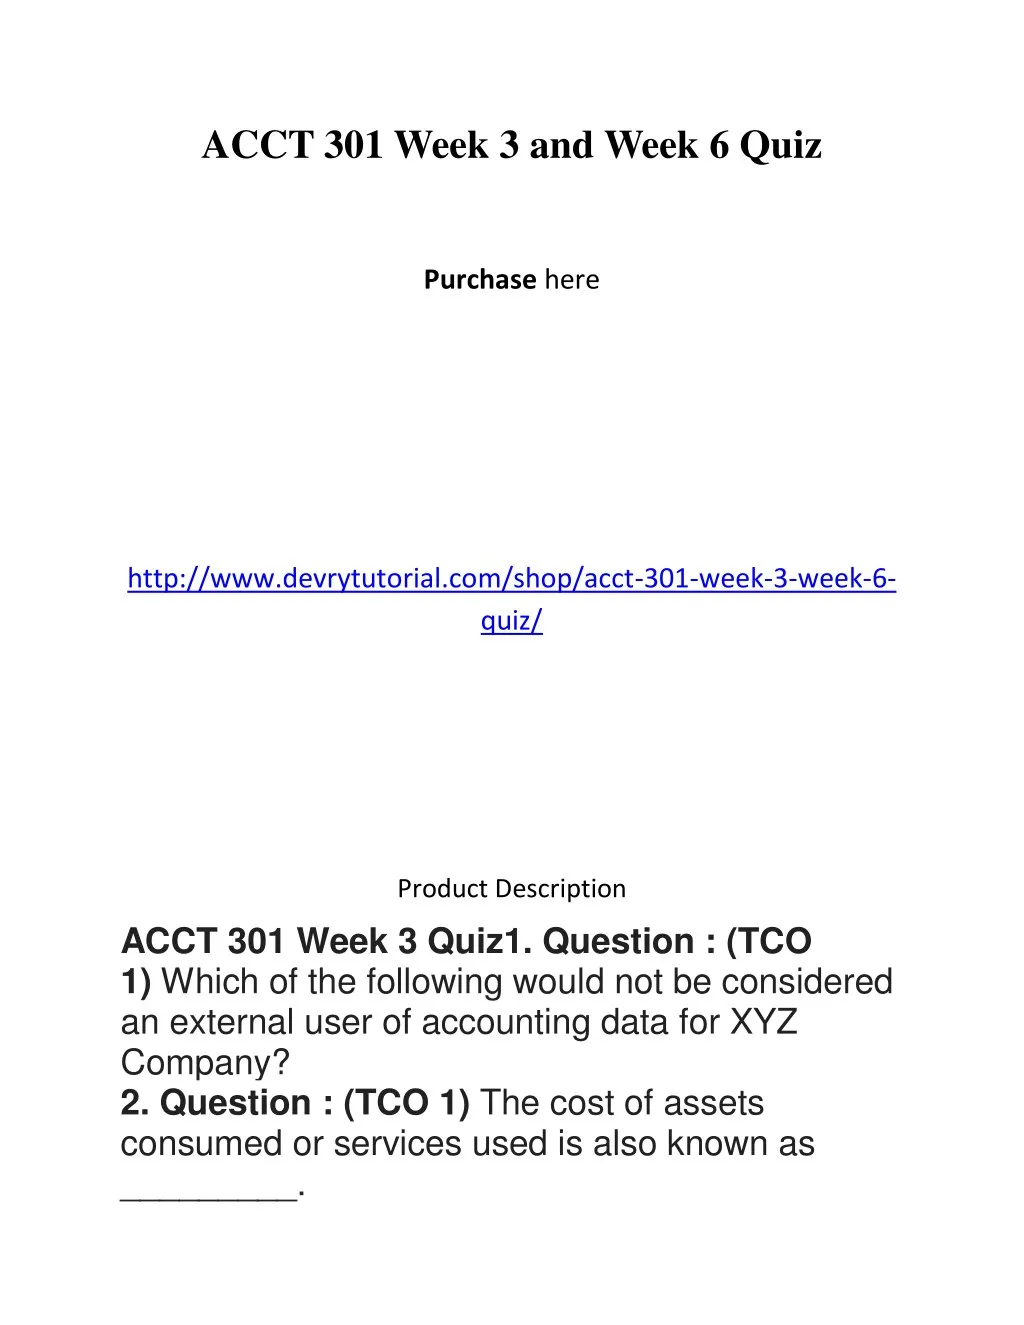 acct 301 week 3 and week 6 quiz